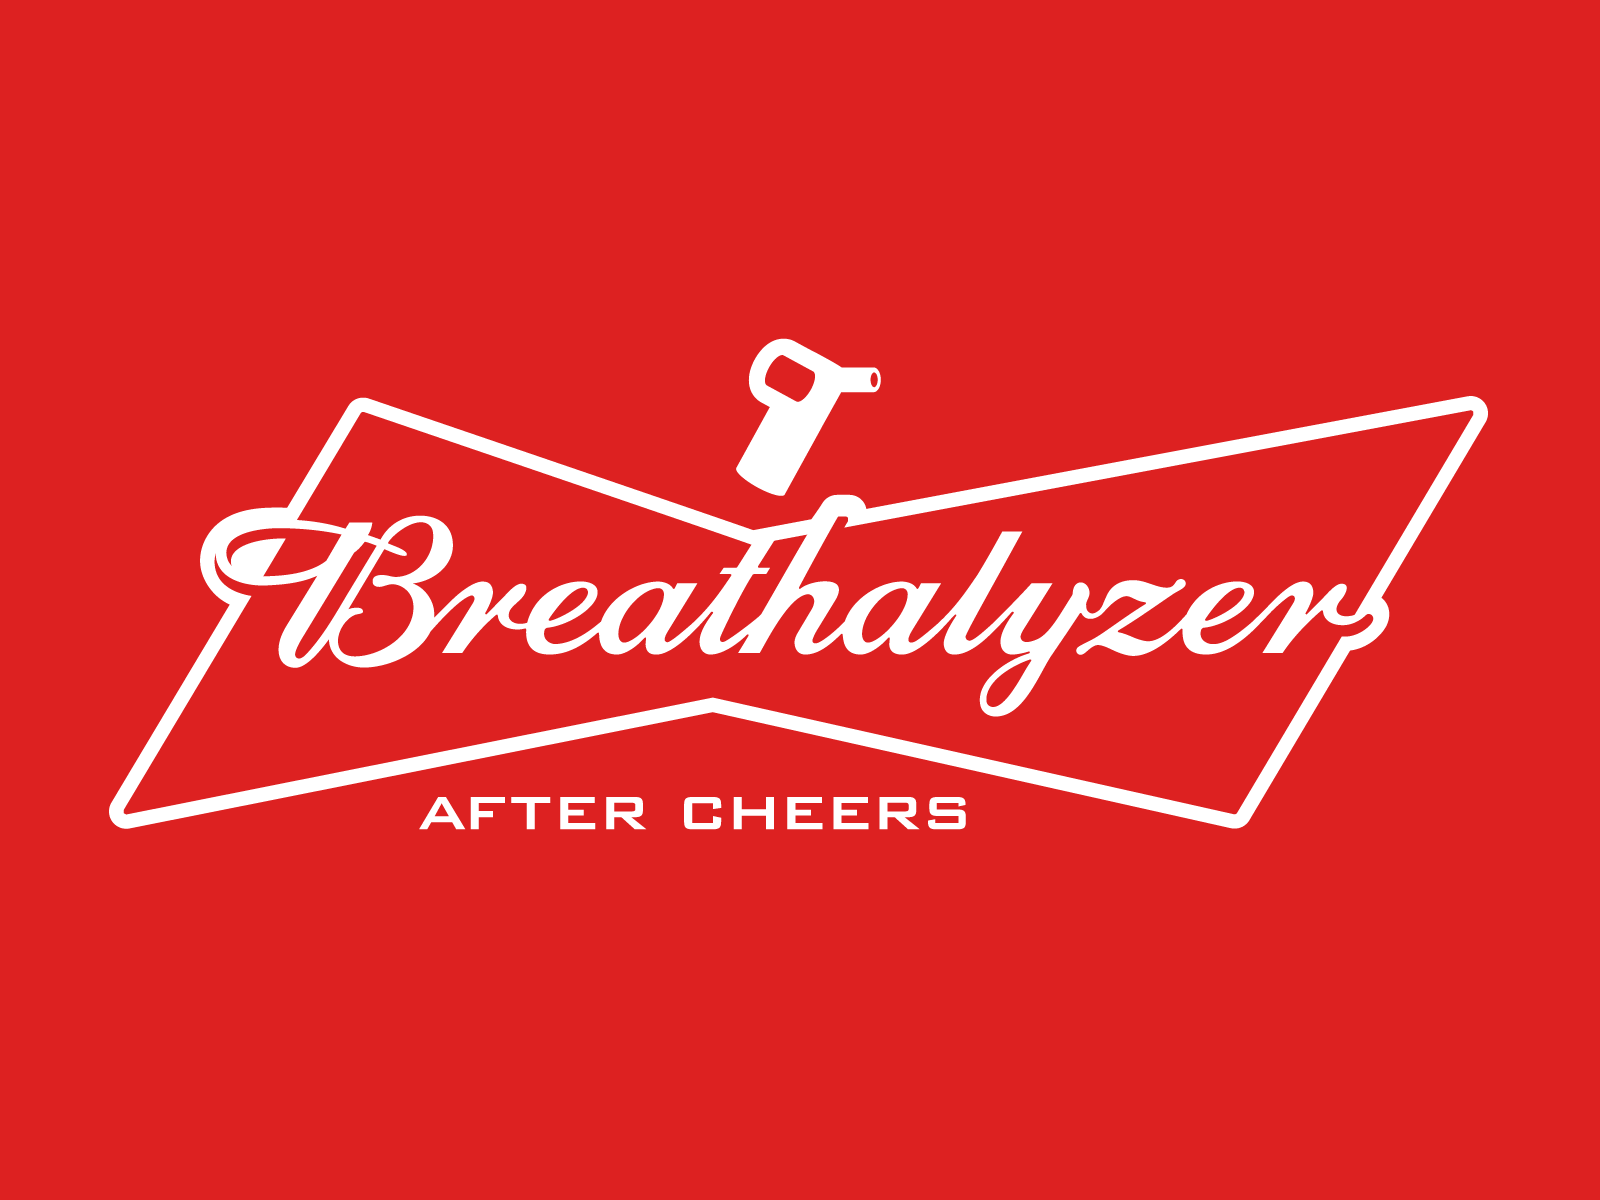 Breathalyzer Logo